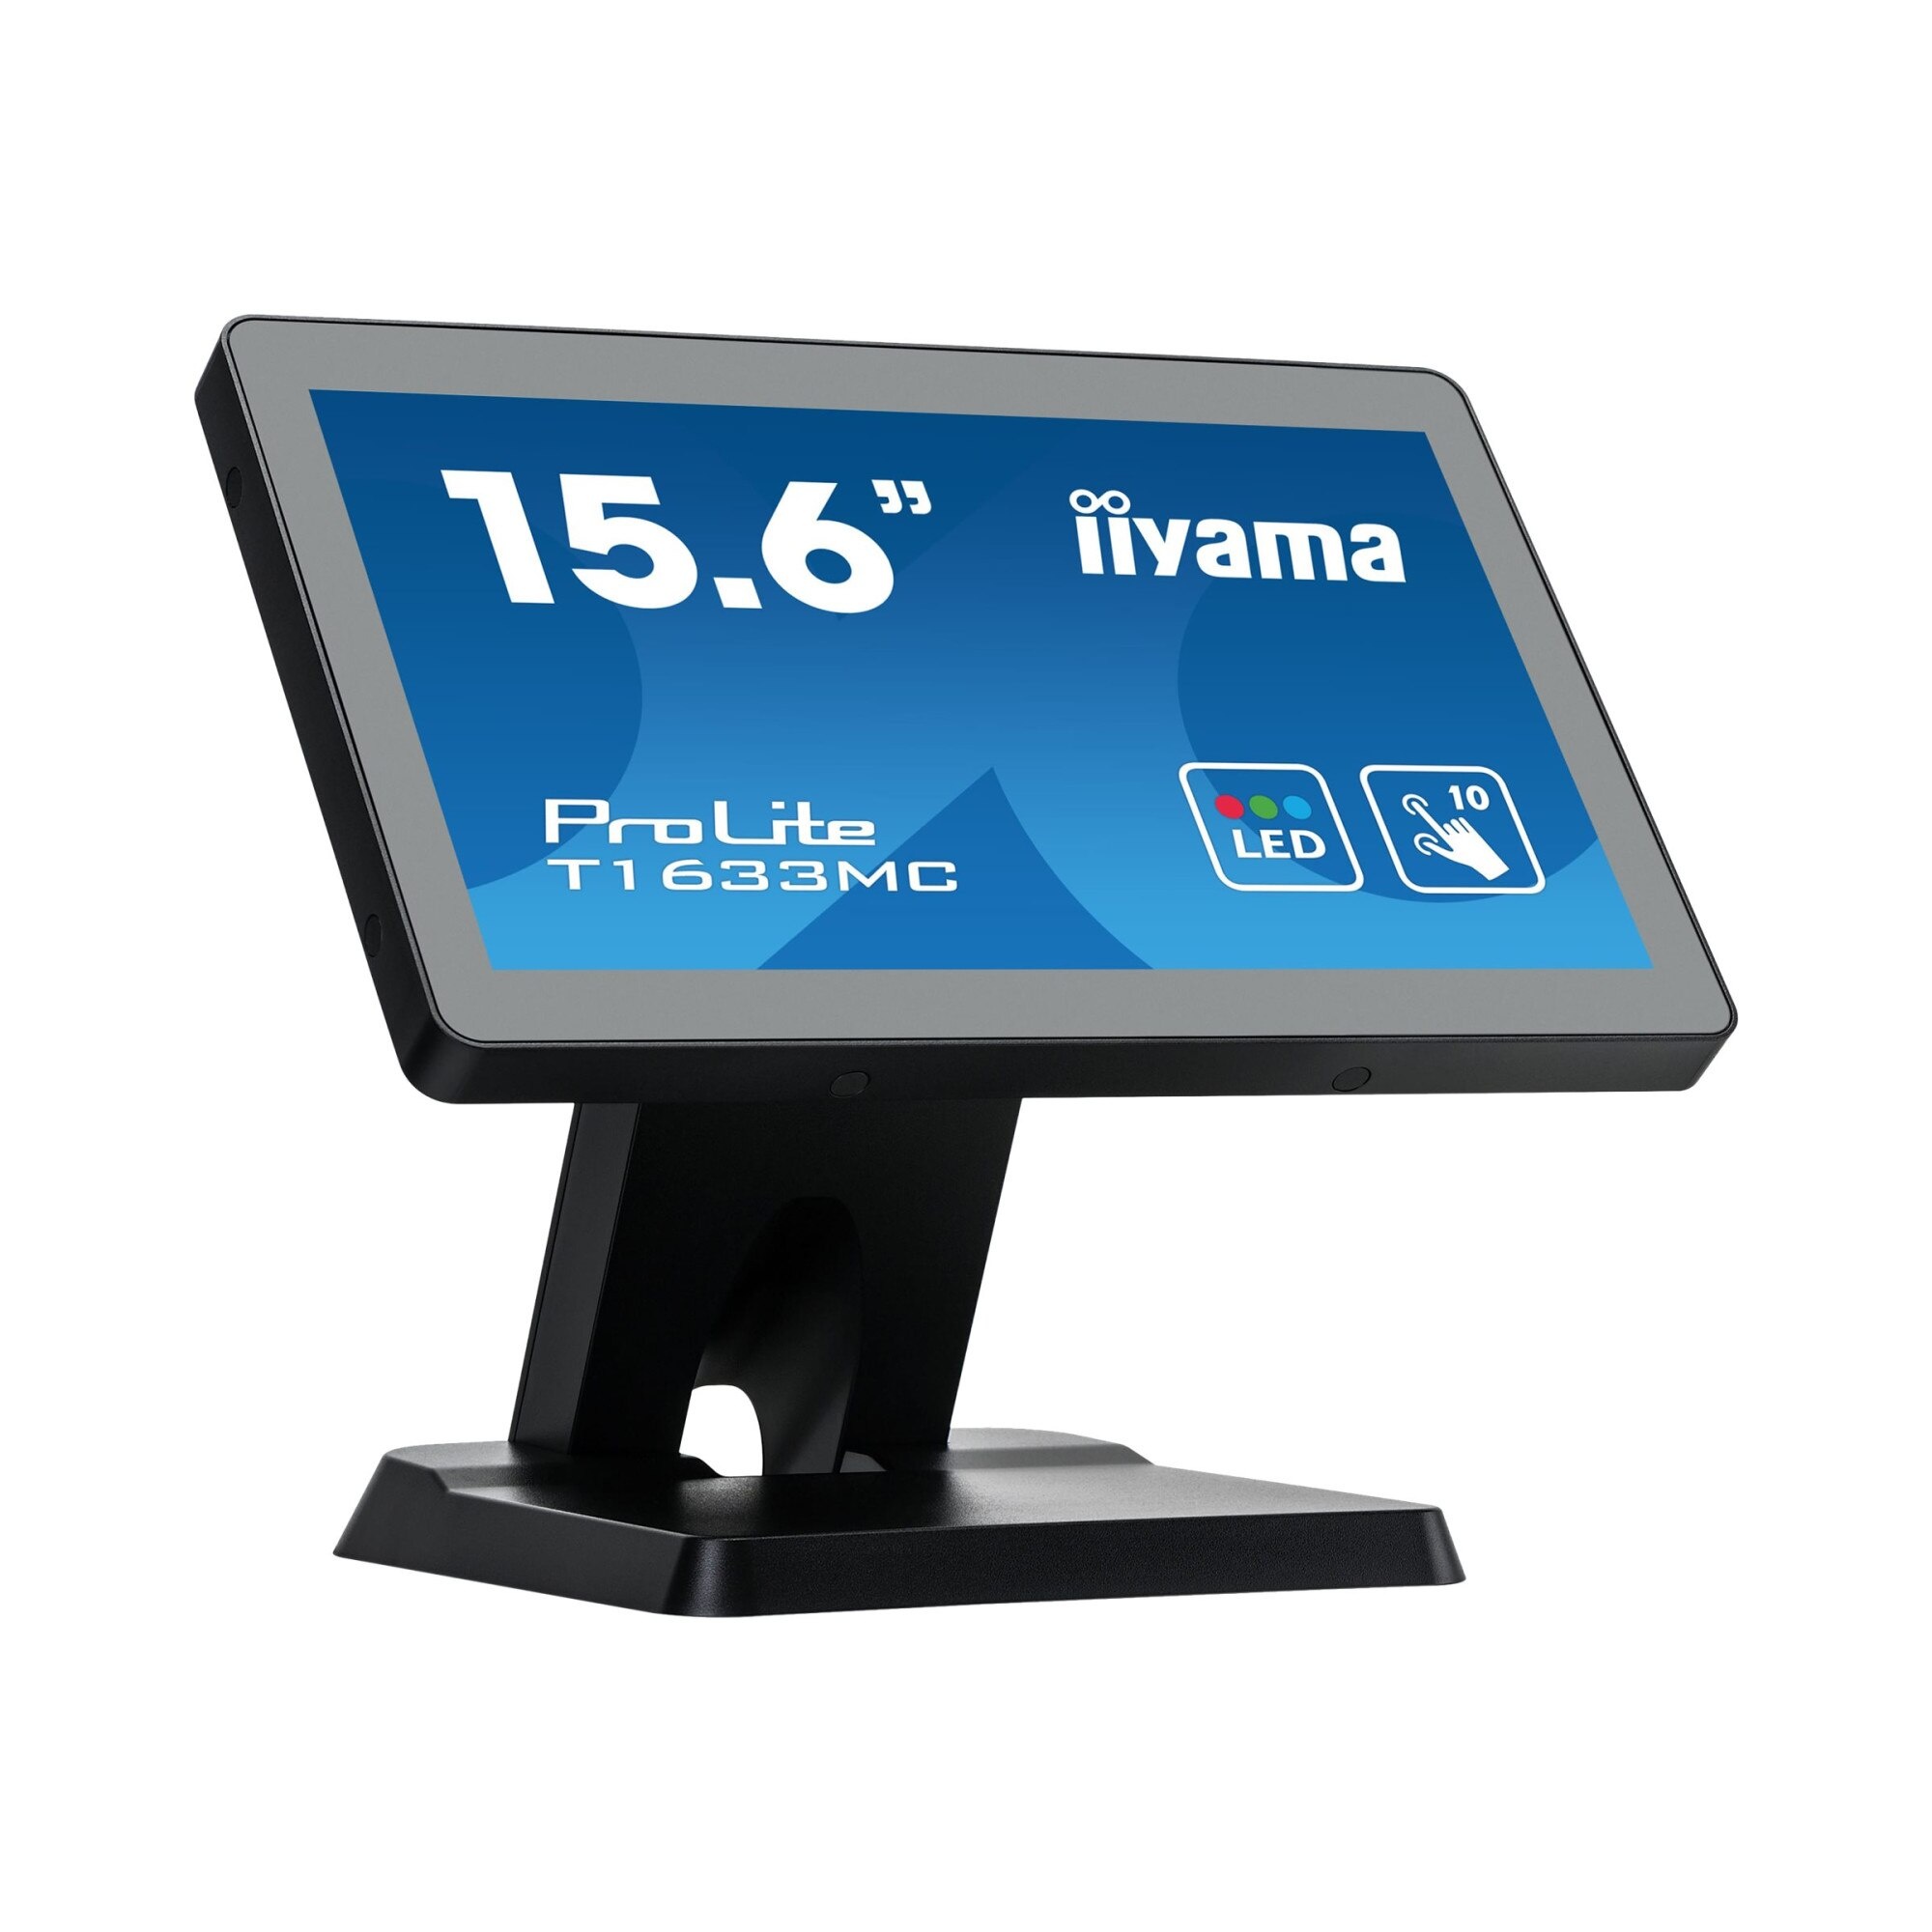 IIYAMA T1633MC-B1 LCD & LED monitorok 1